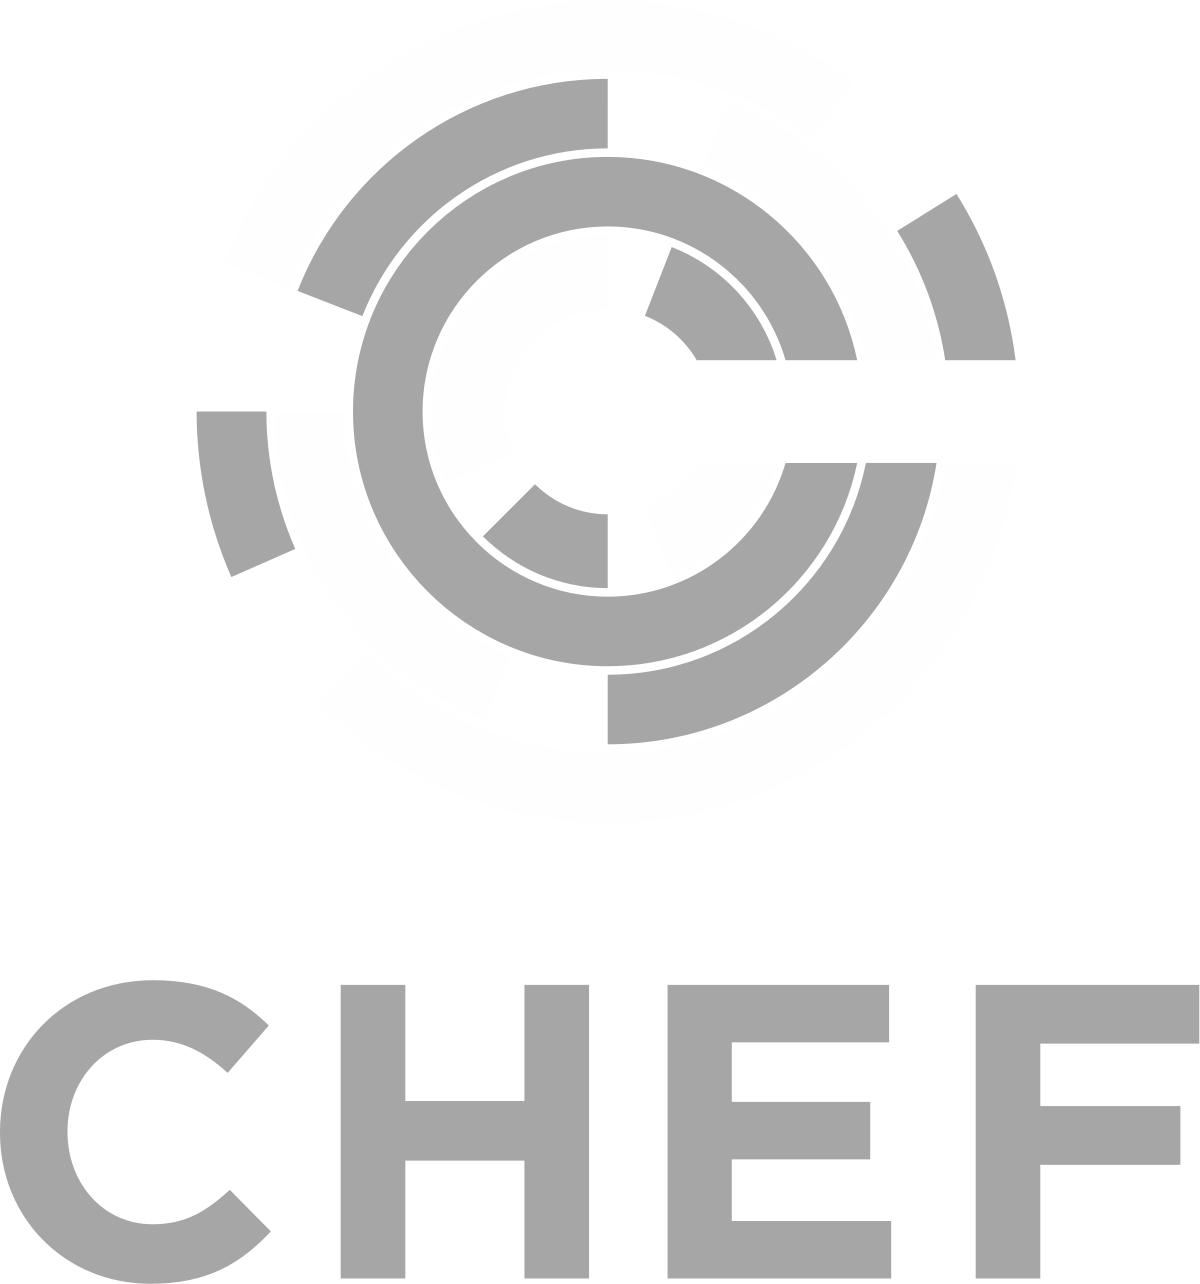 Chef logo monochrome